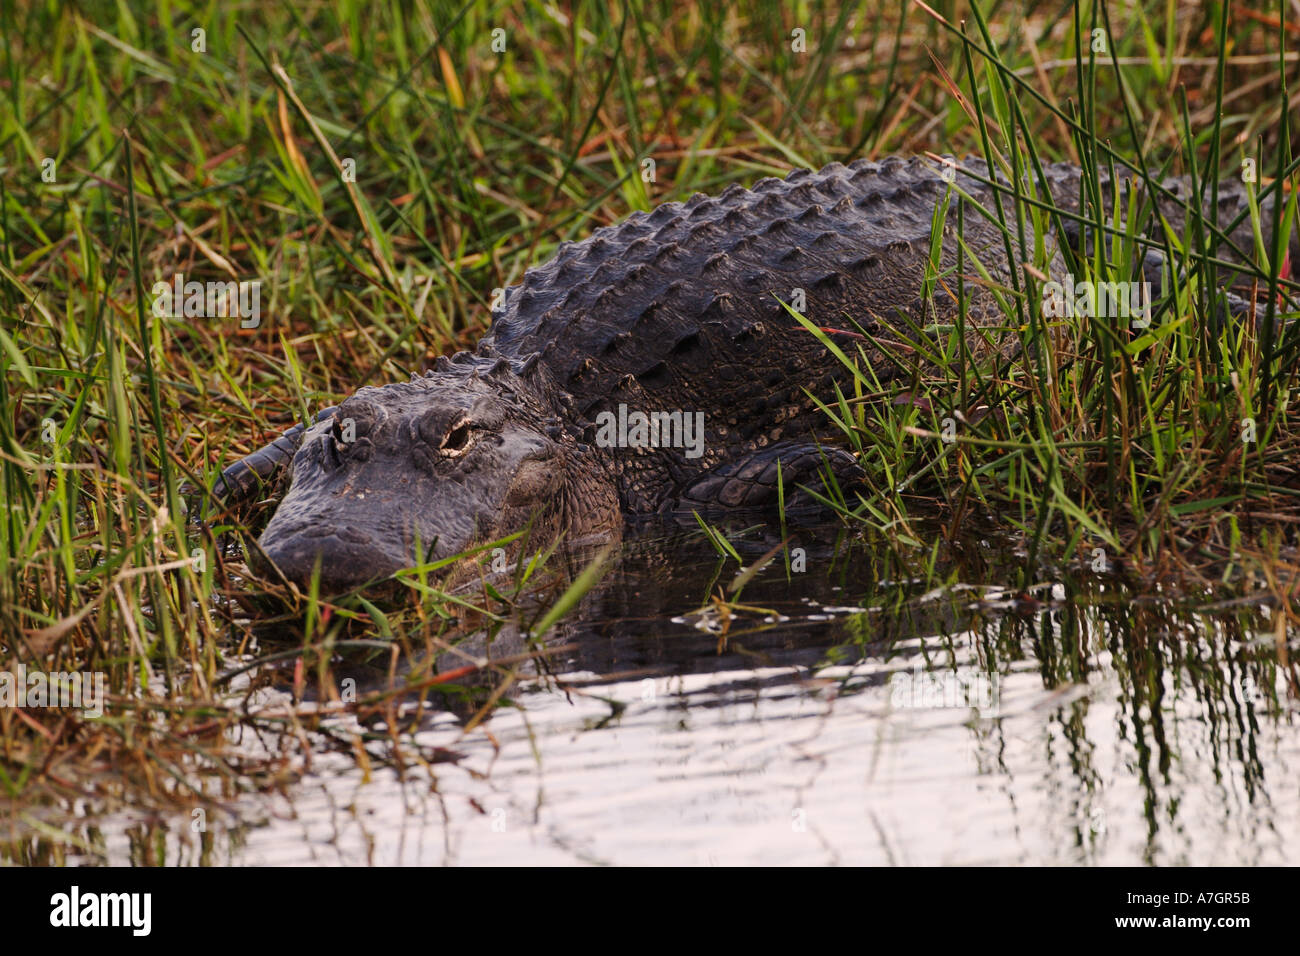 American Alligator, Alligator mississippiensis, Everglades National Park, Florida Stock Photo